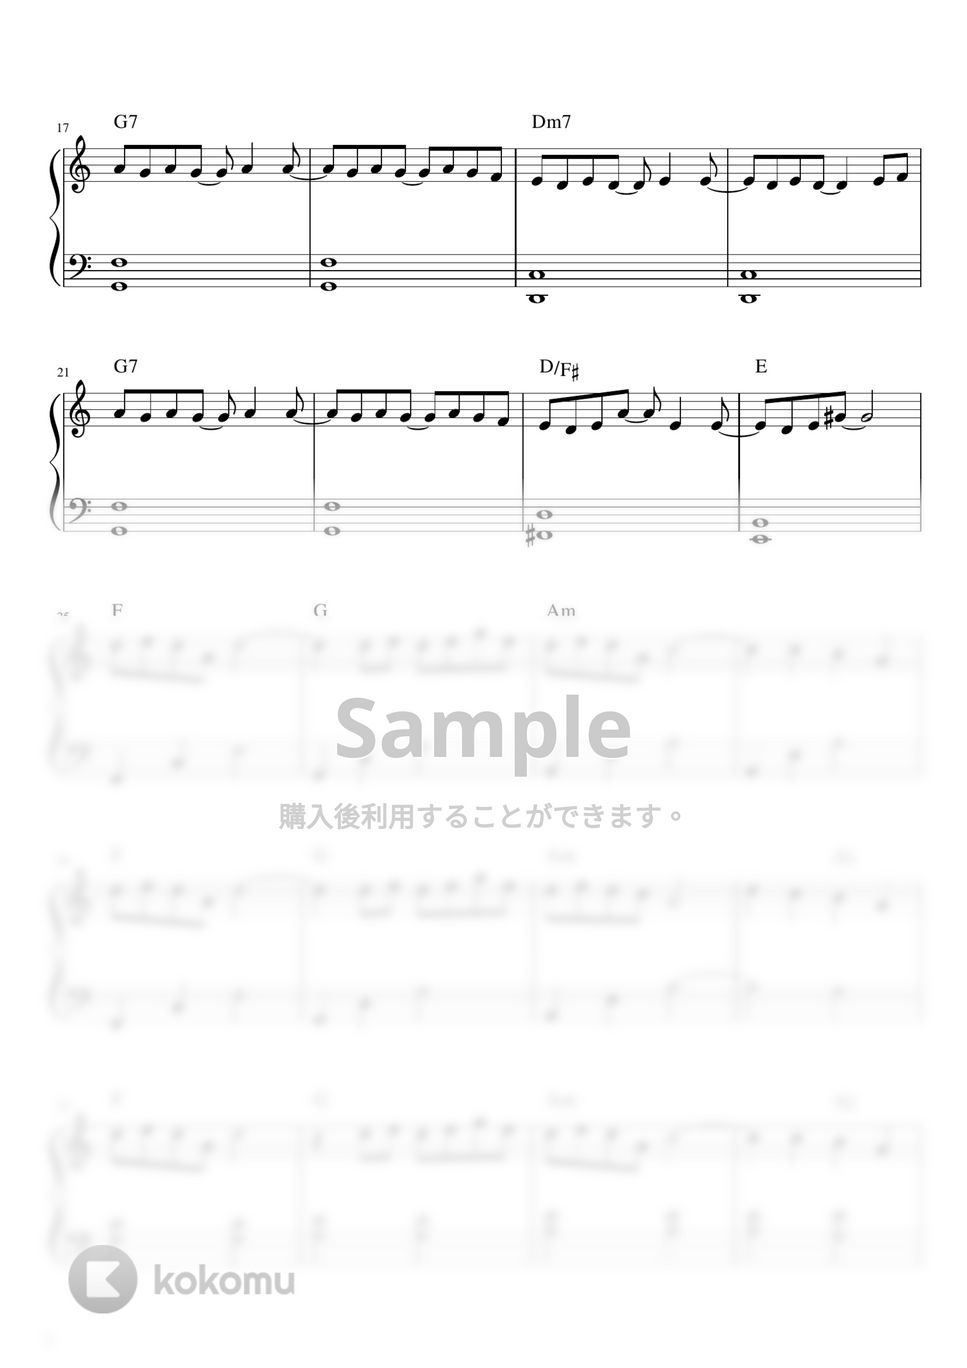 Ryuichi Sakamoto - Merry Christmas, Mr. Lawrence (easy ver.) by Pichi Ahr